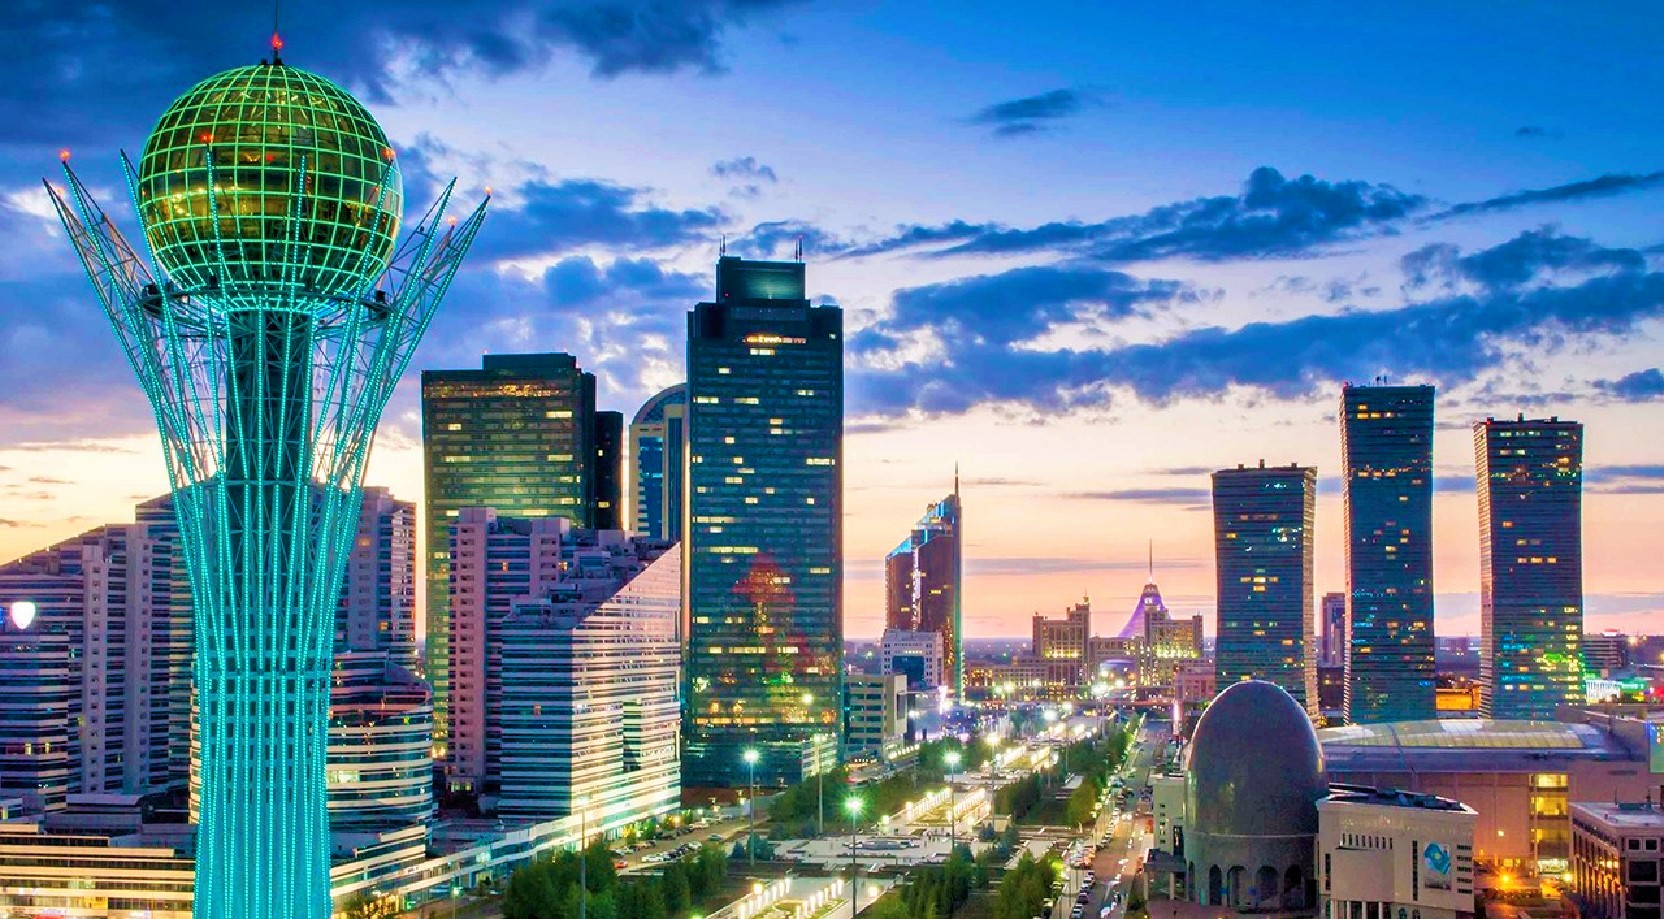 Astana Kazakhstan - The Glitzy Capital Of 21st Century